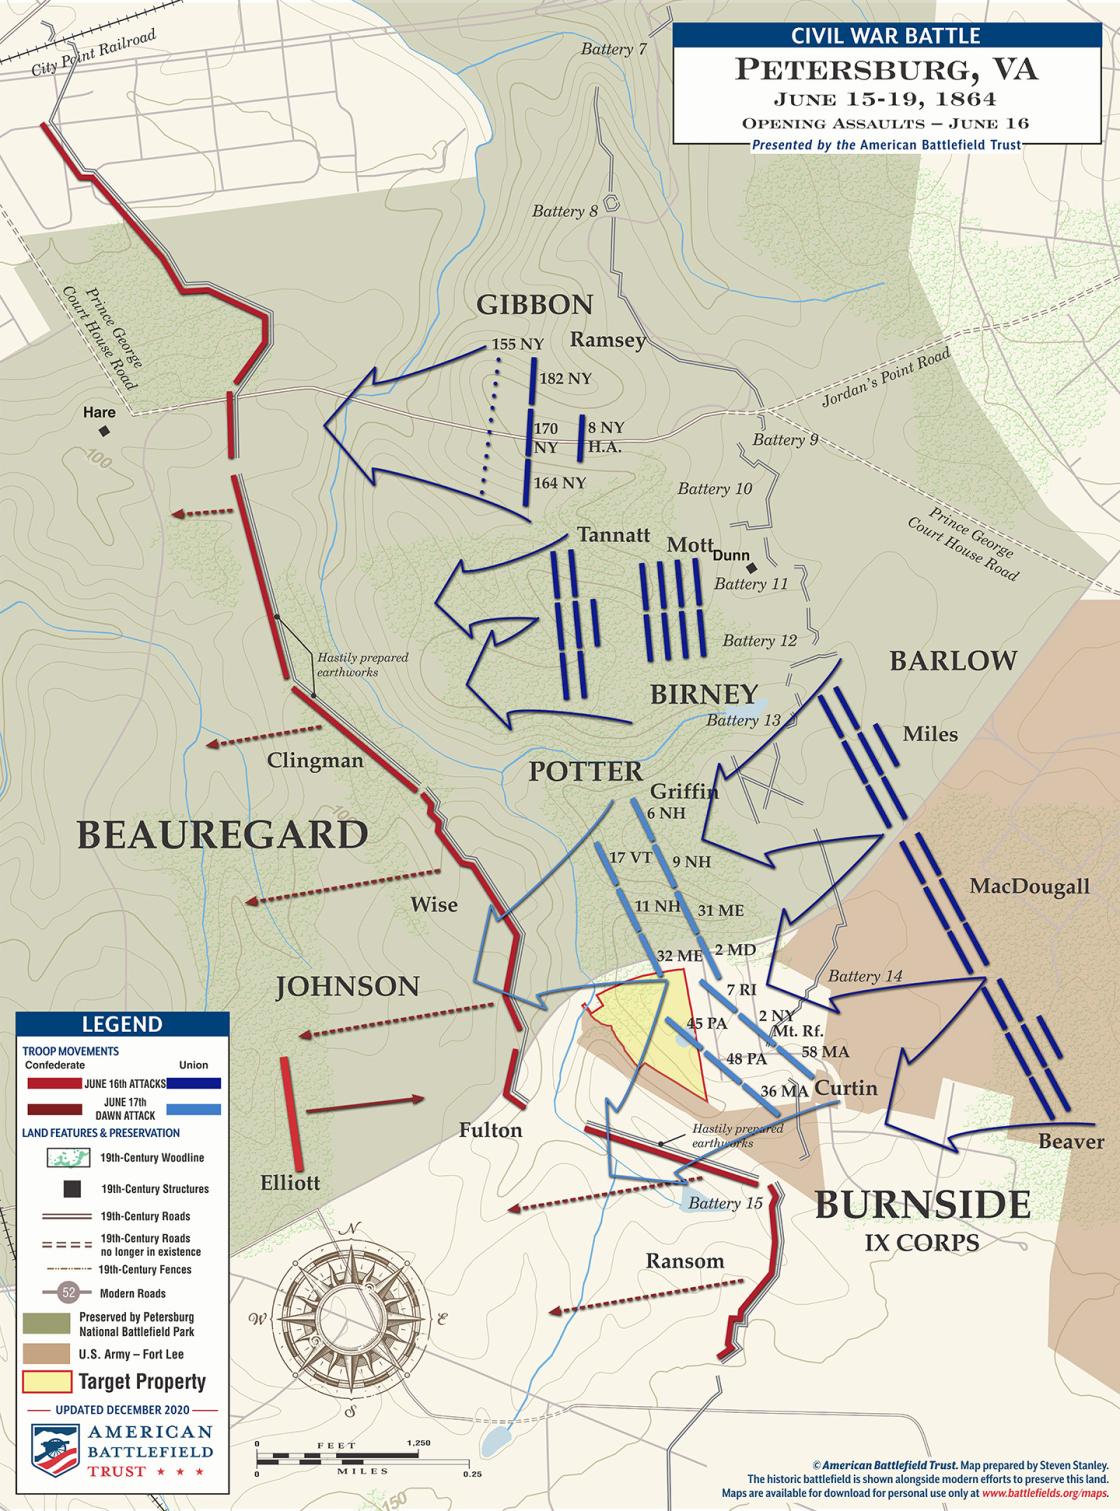 Petersburg | Opening Assaults | June 16, 1864 (December 2020)